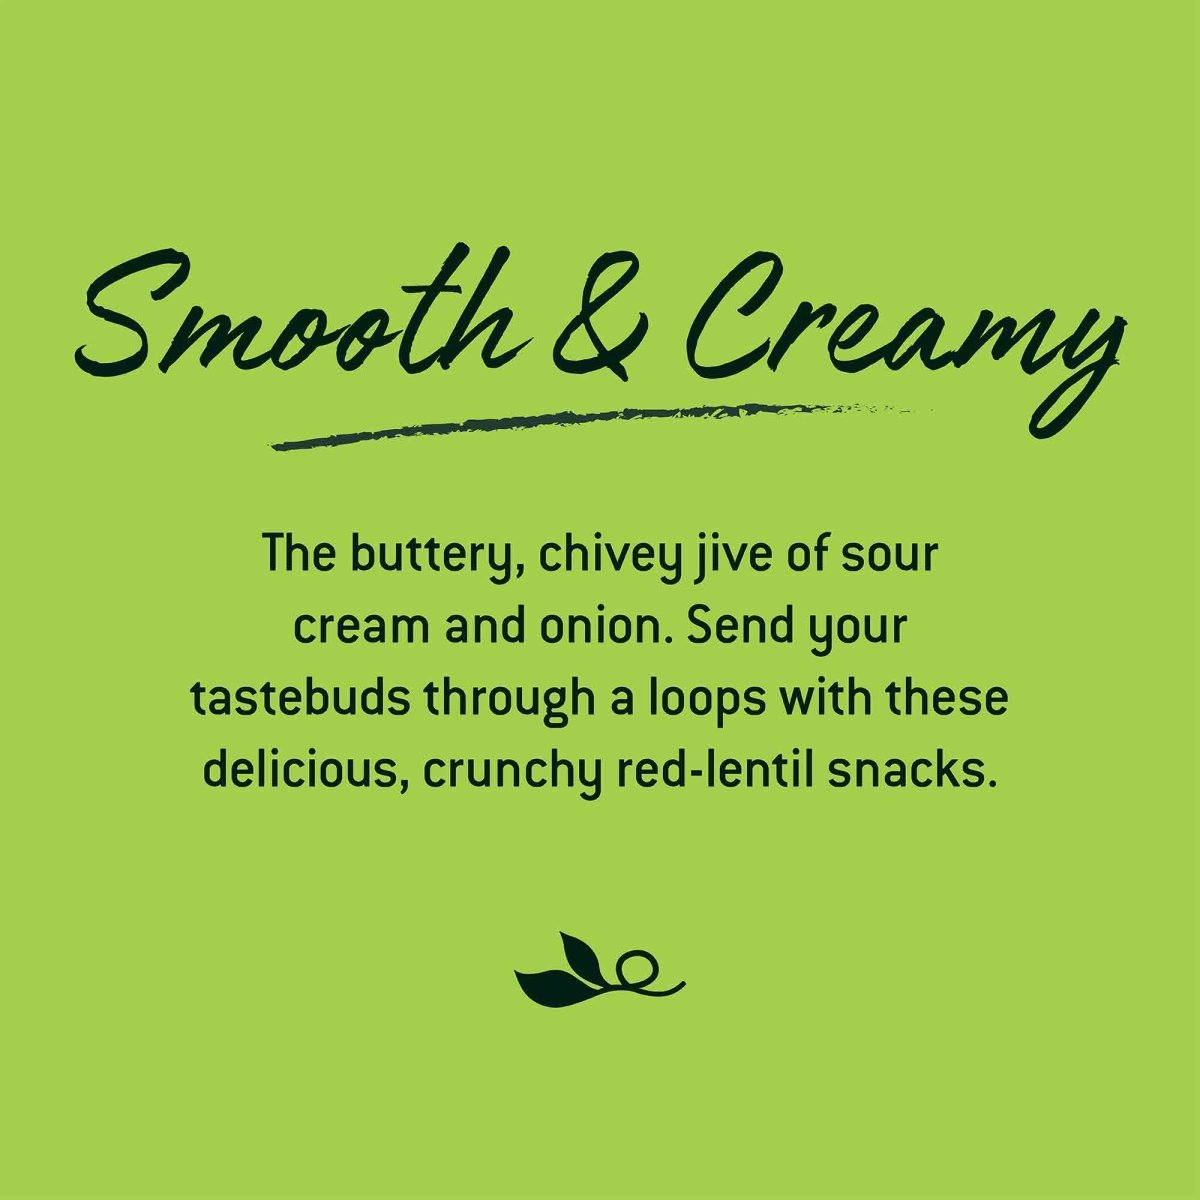 Crunchy Loops Sour Cream &amp; Onion - Calbee Harvest Snaps